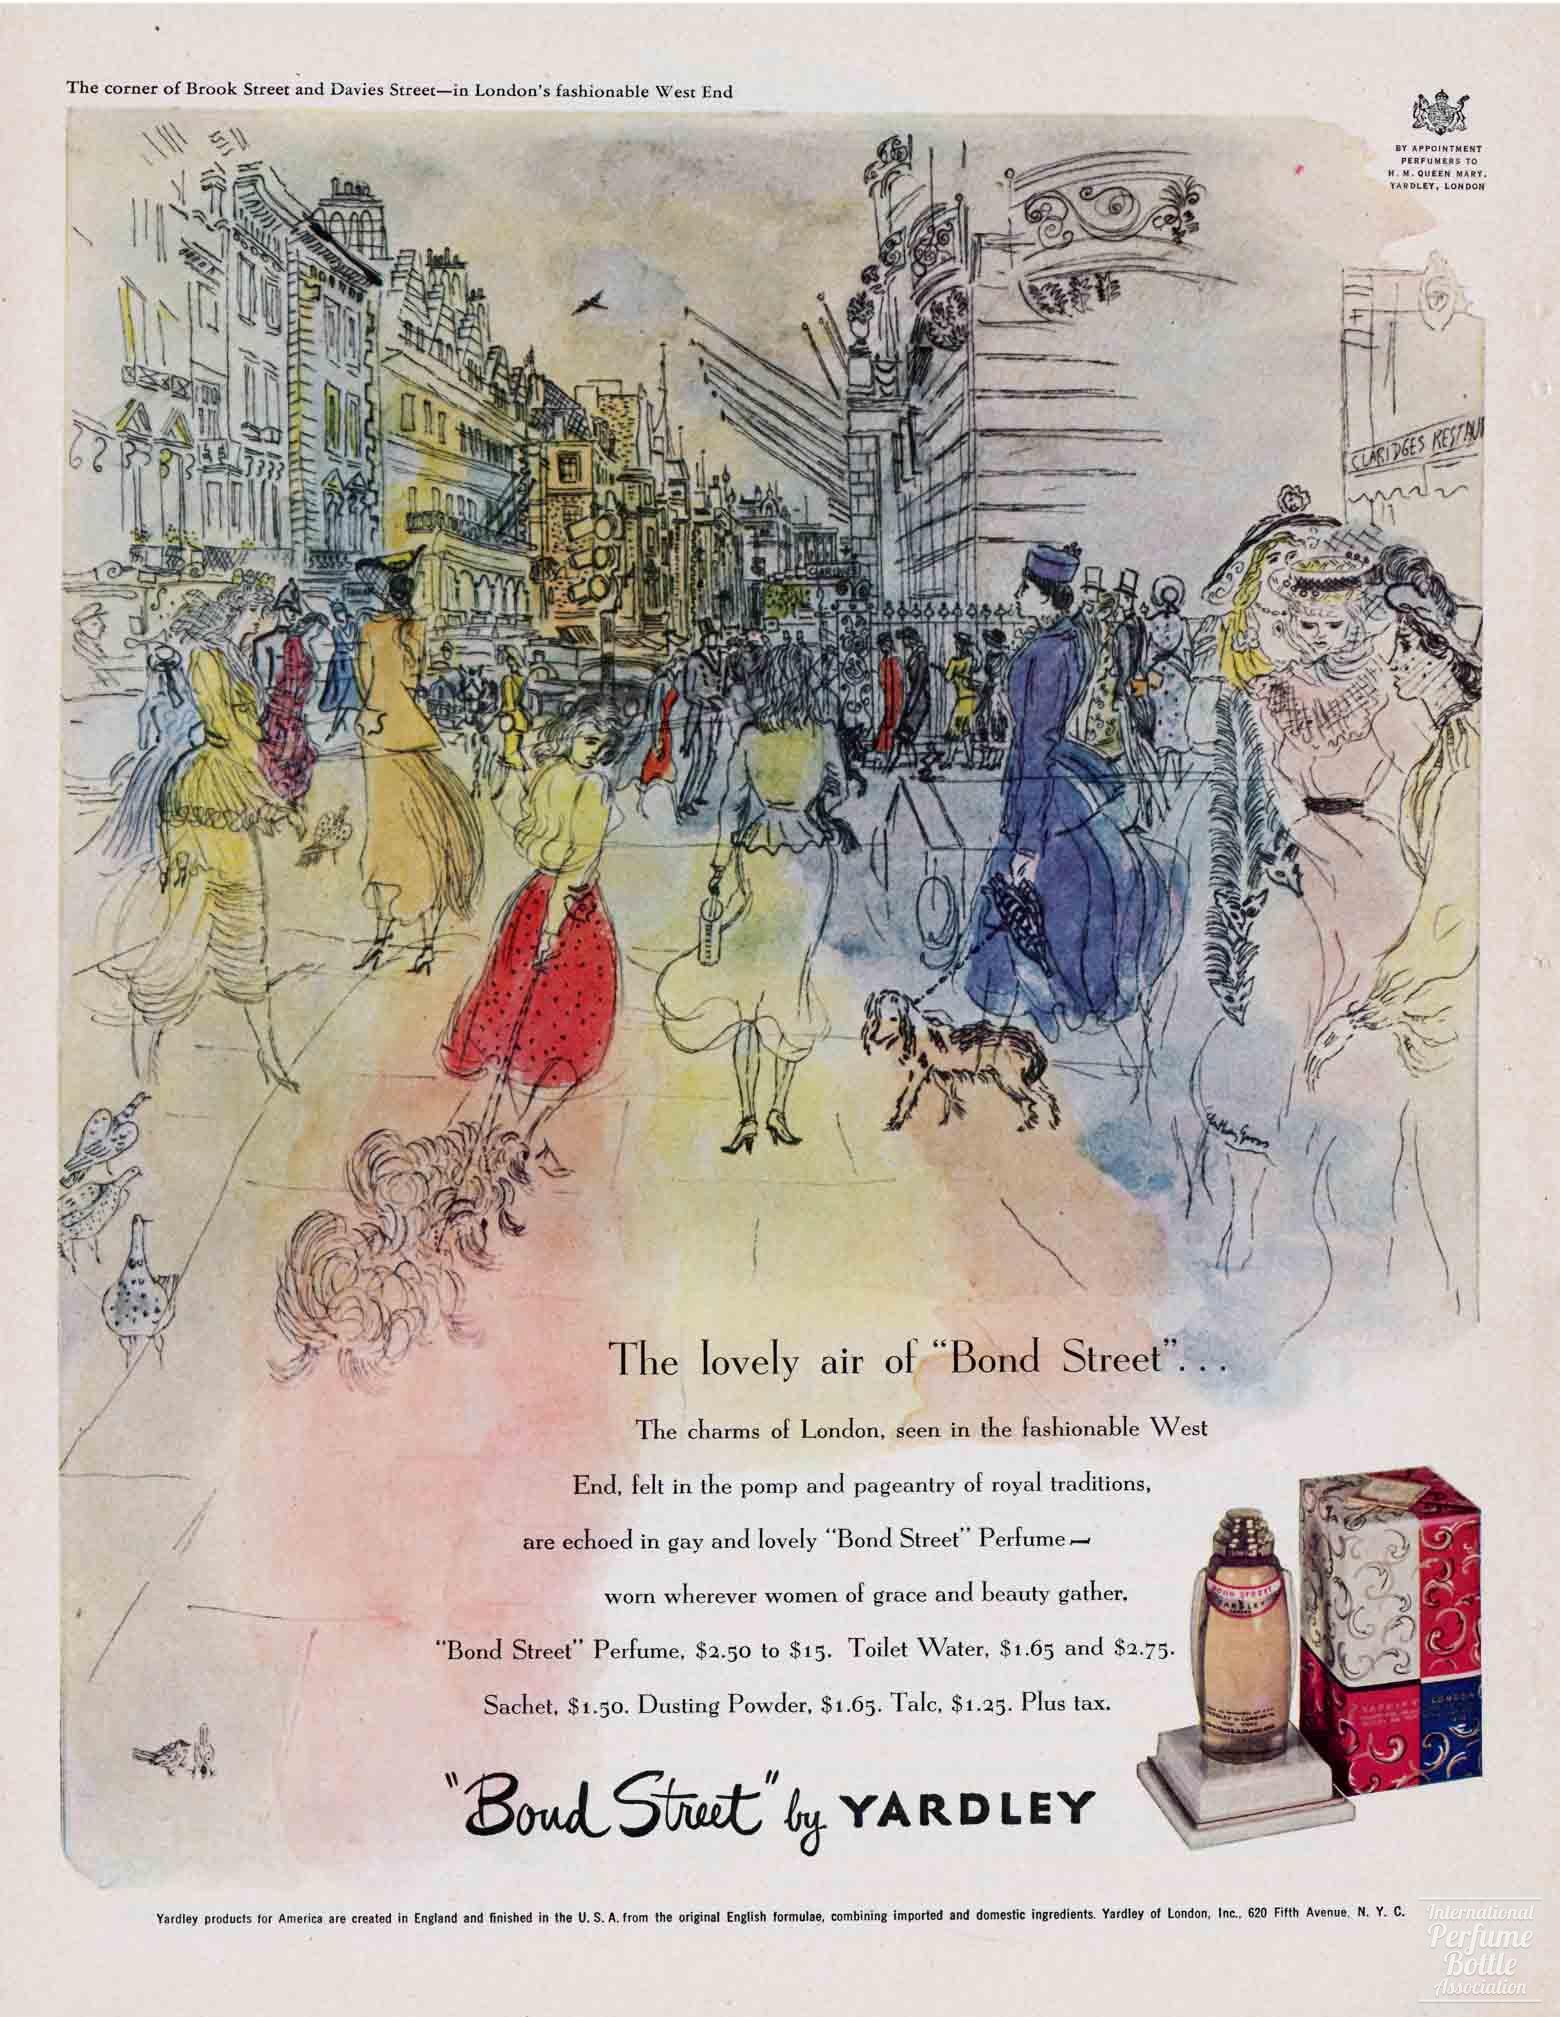 "Bond Street" by Yardley Dog Walker Advertisement - 1949